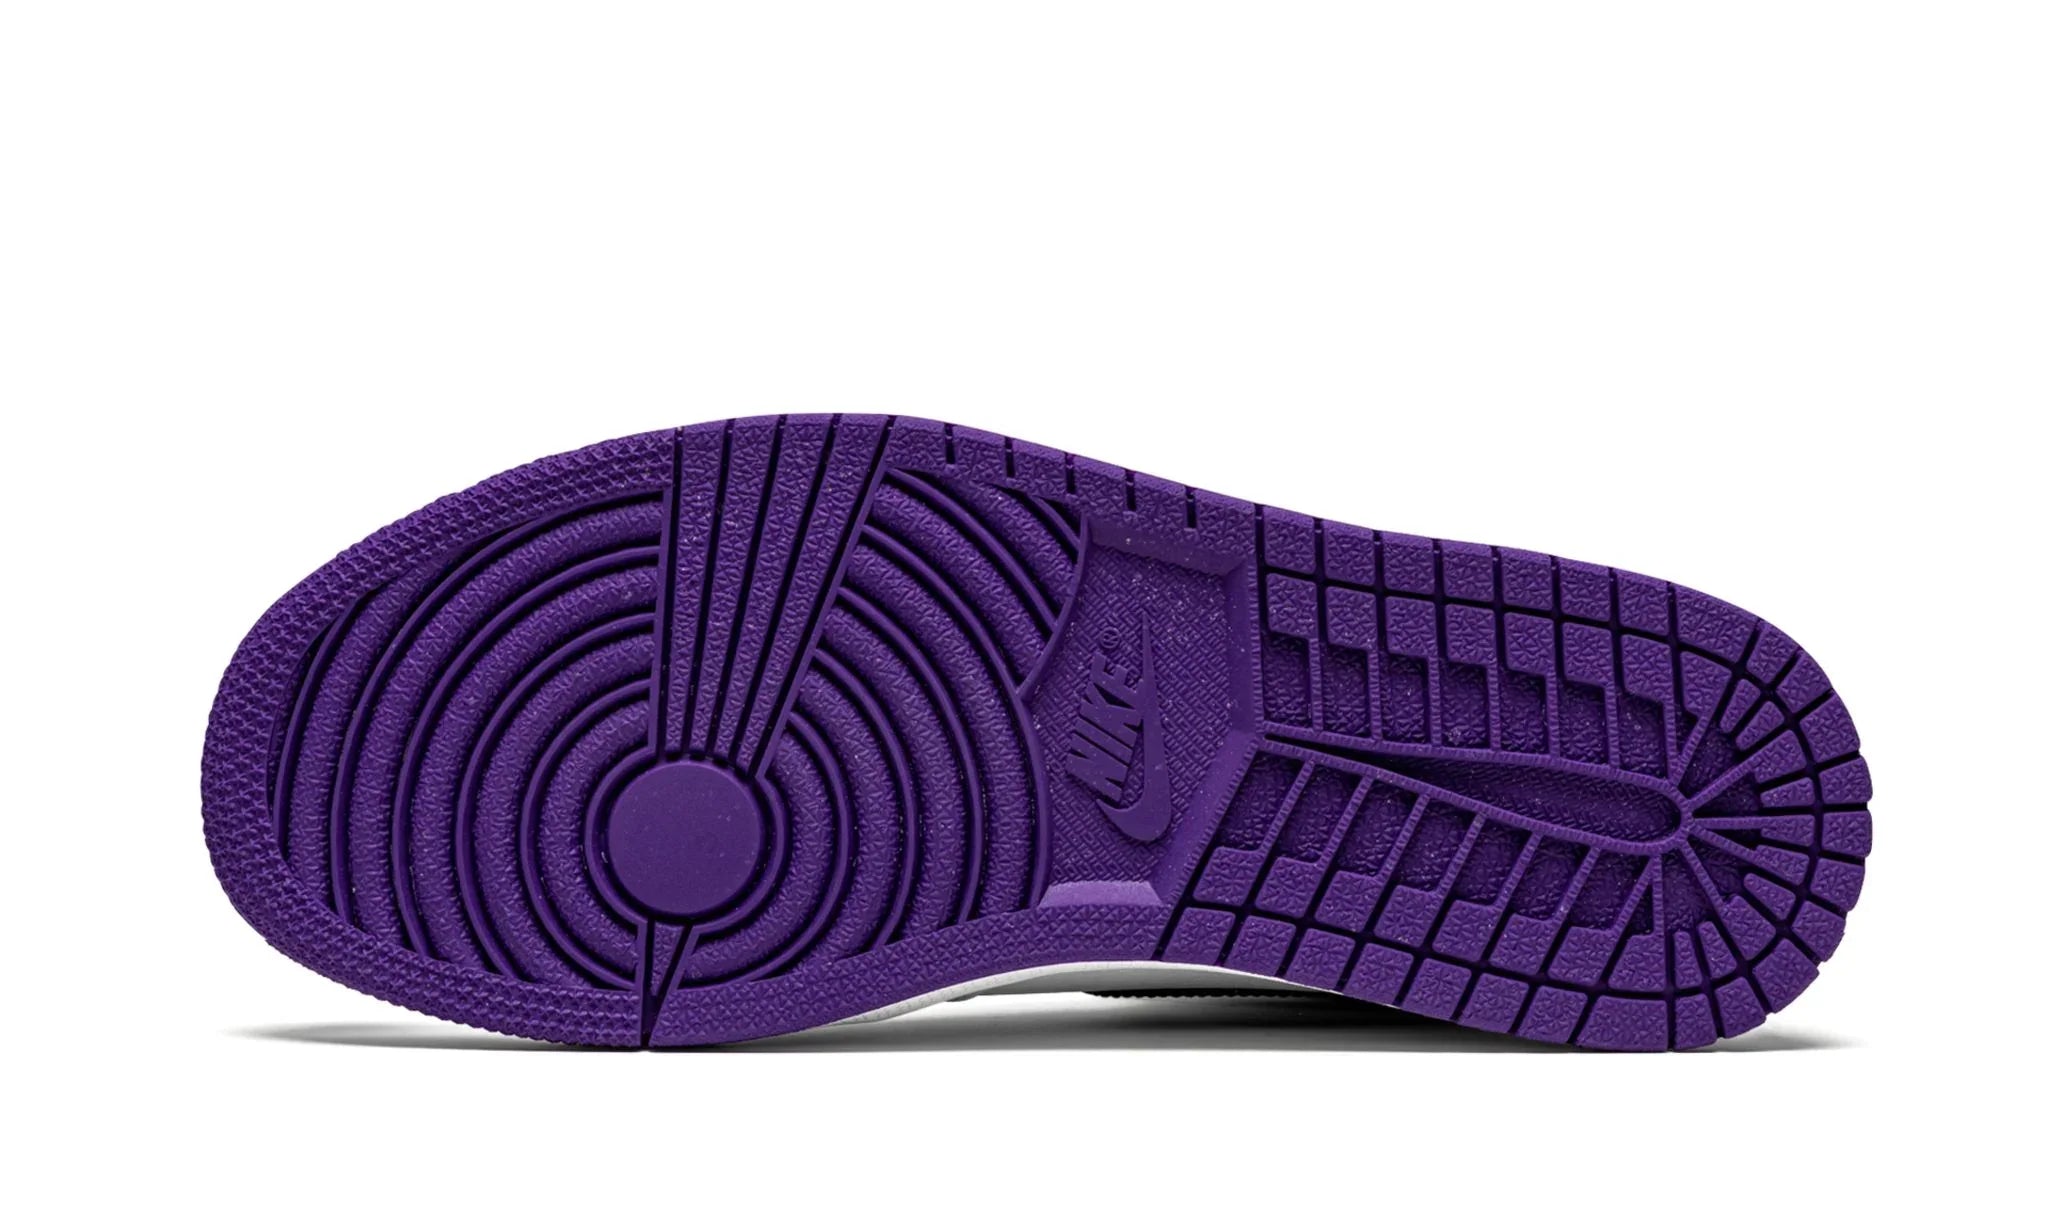 Jordan 1 High "Court Purple" (W) - CD0461-151 - Sneakers